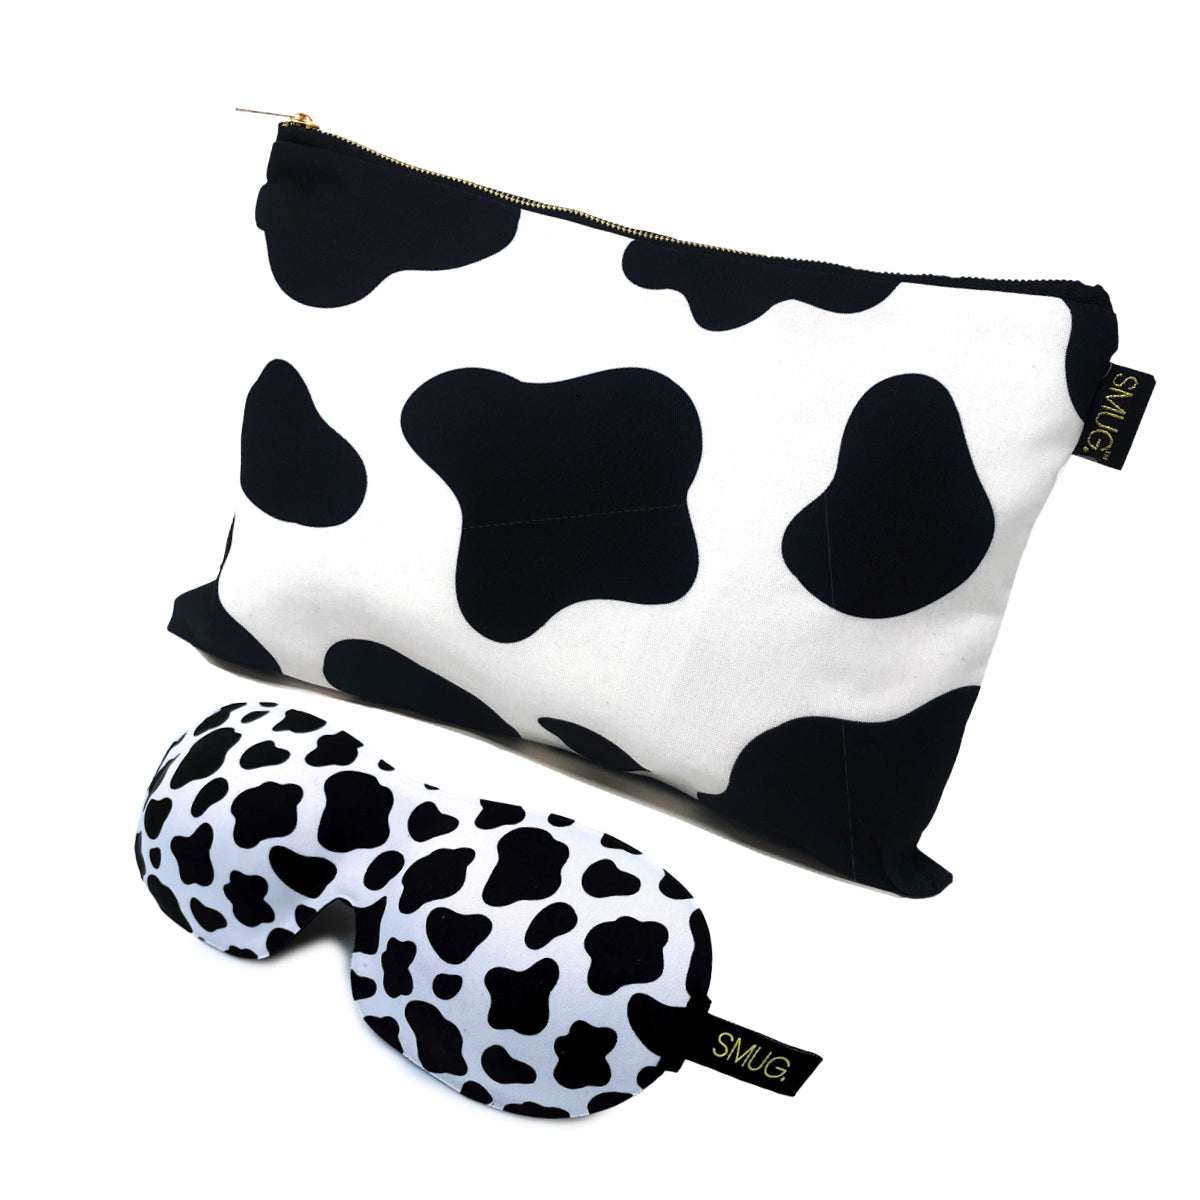 Contoured Sleep Mask & Accessories Bag Set - Cow Print